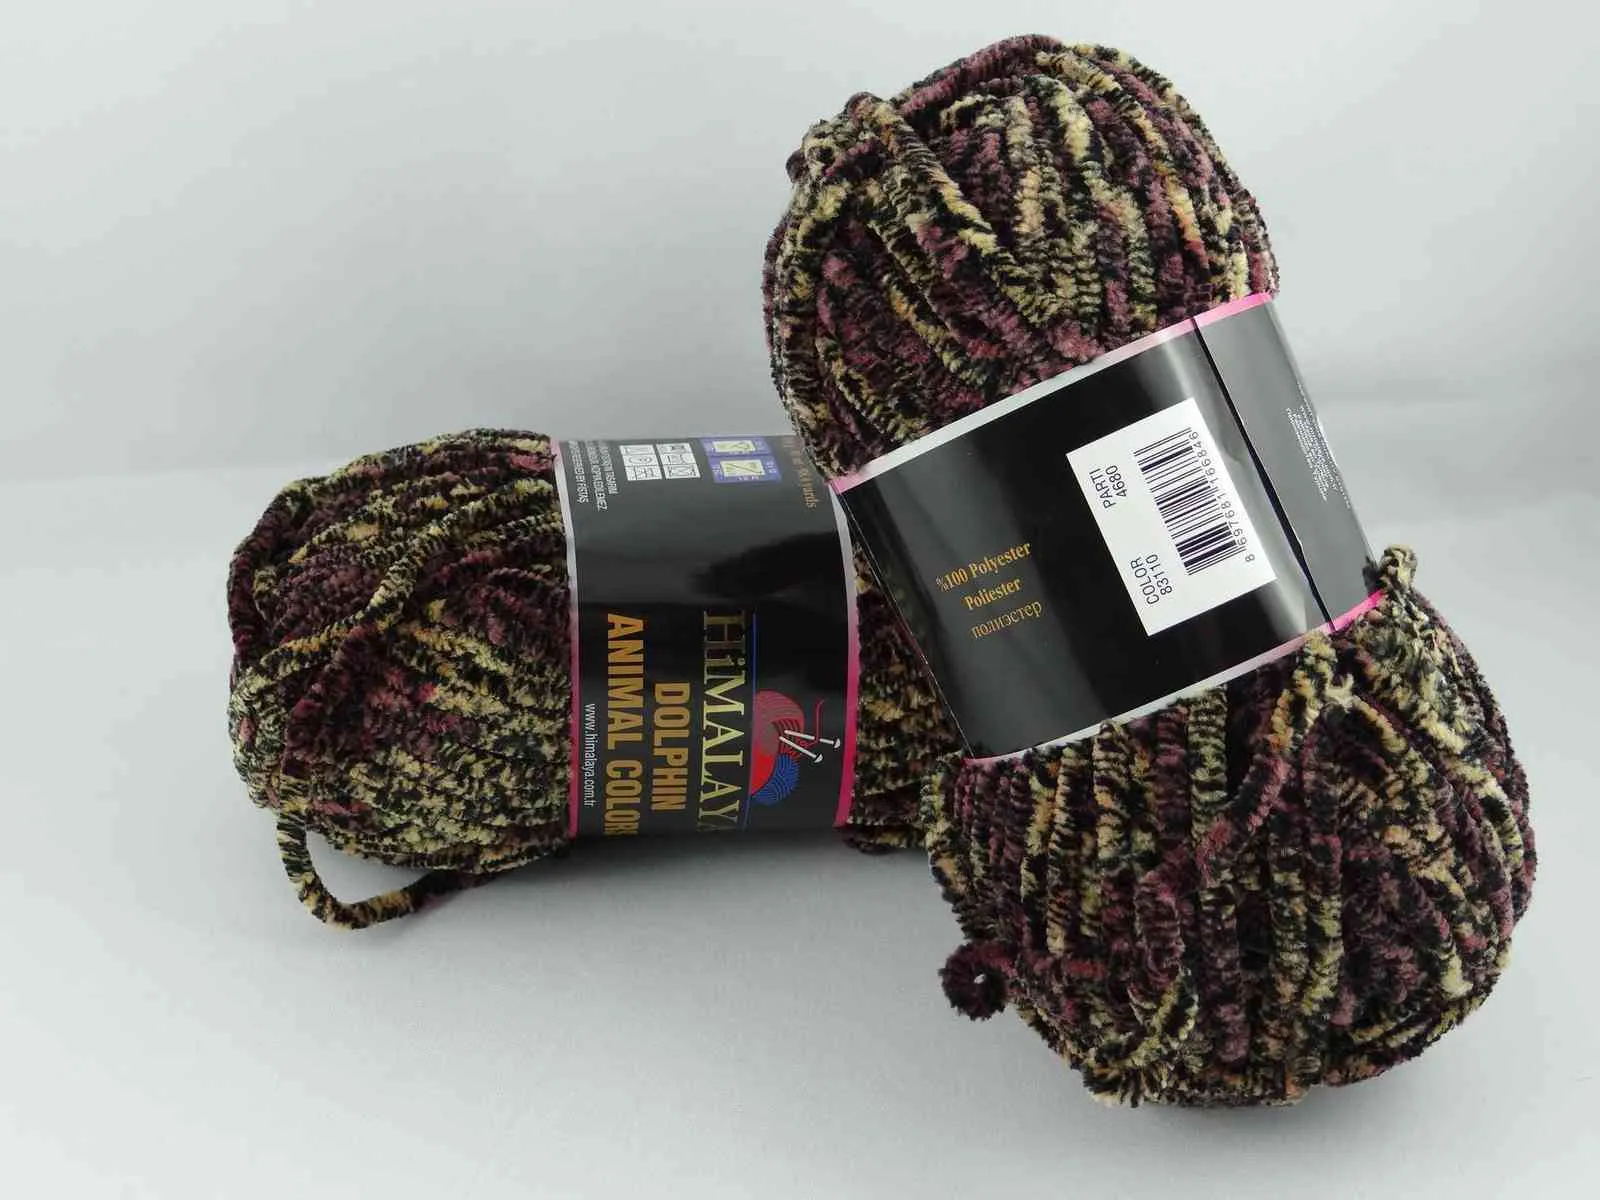 Himalaya Dolphin Baby Bulky Knitting Crochet Yarn 5 LOT/BALLS 100g